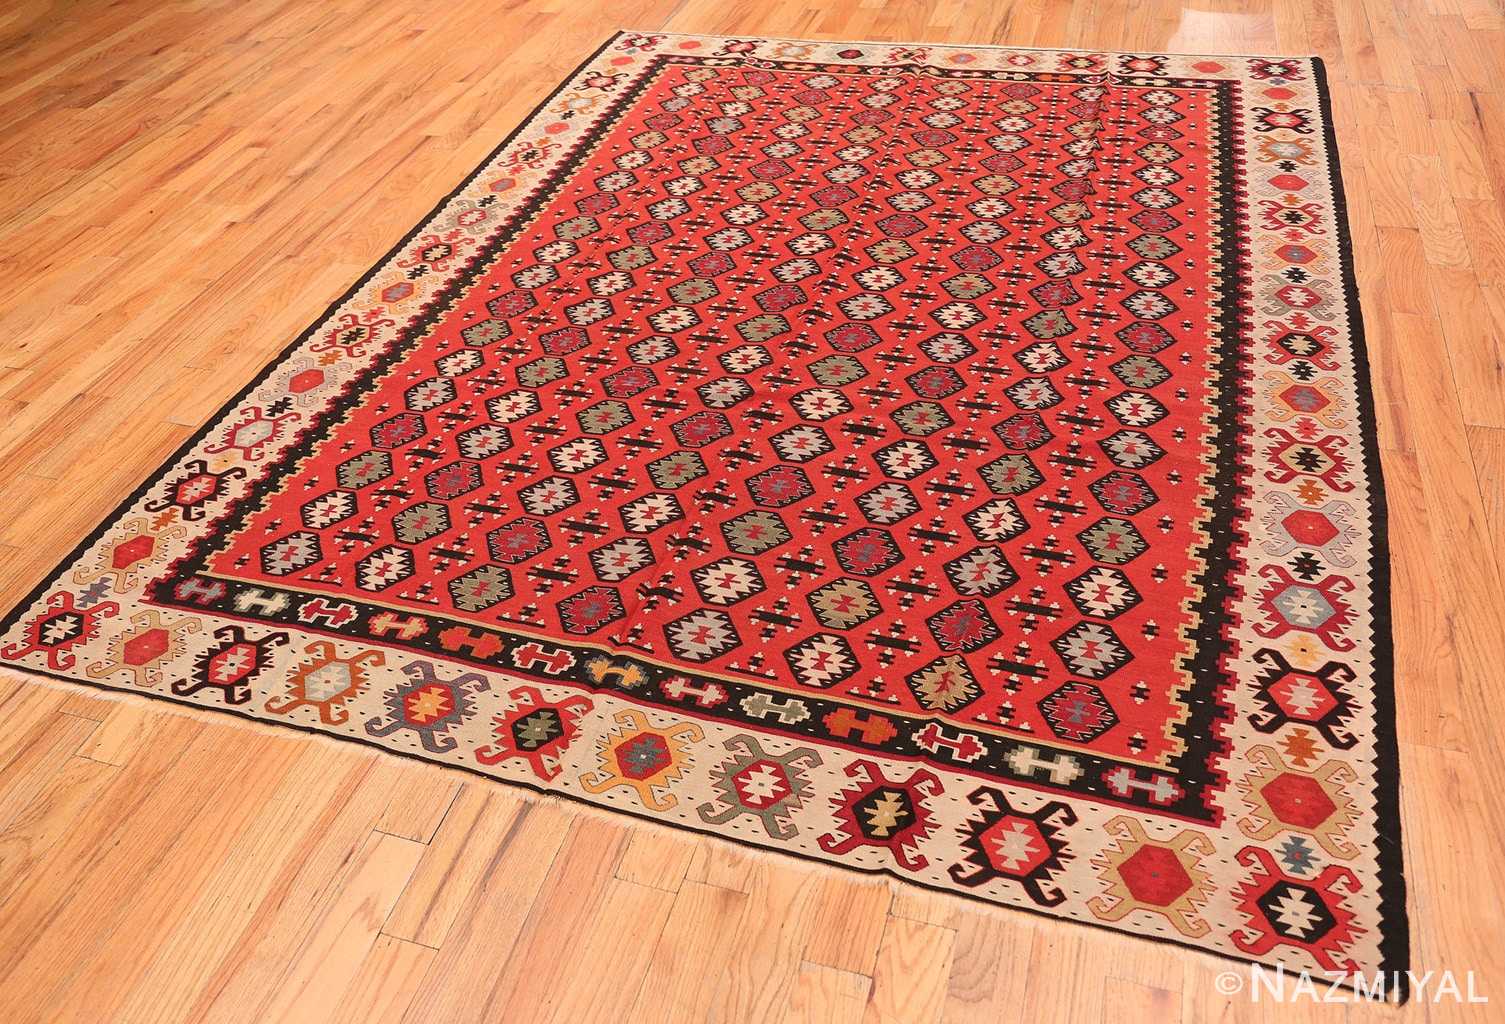 Full Vintage Turkish Kilim rug 50515 by Nazmiyal